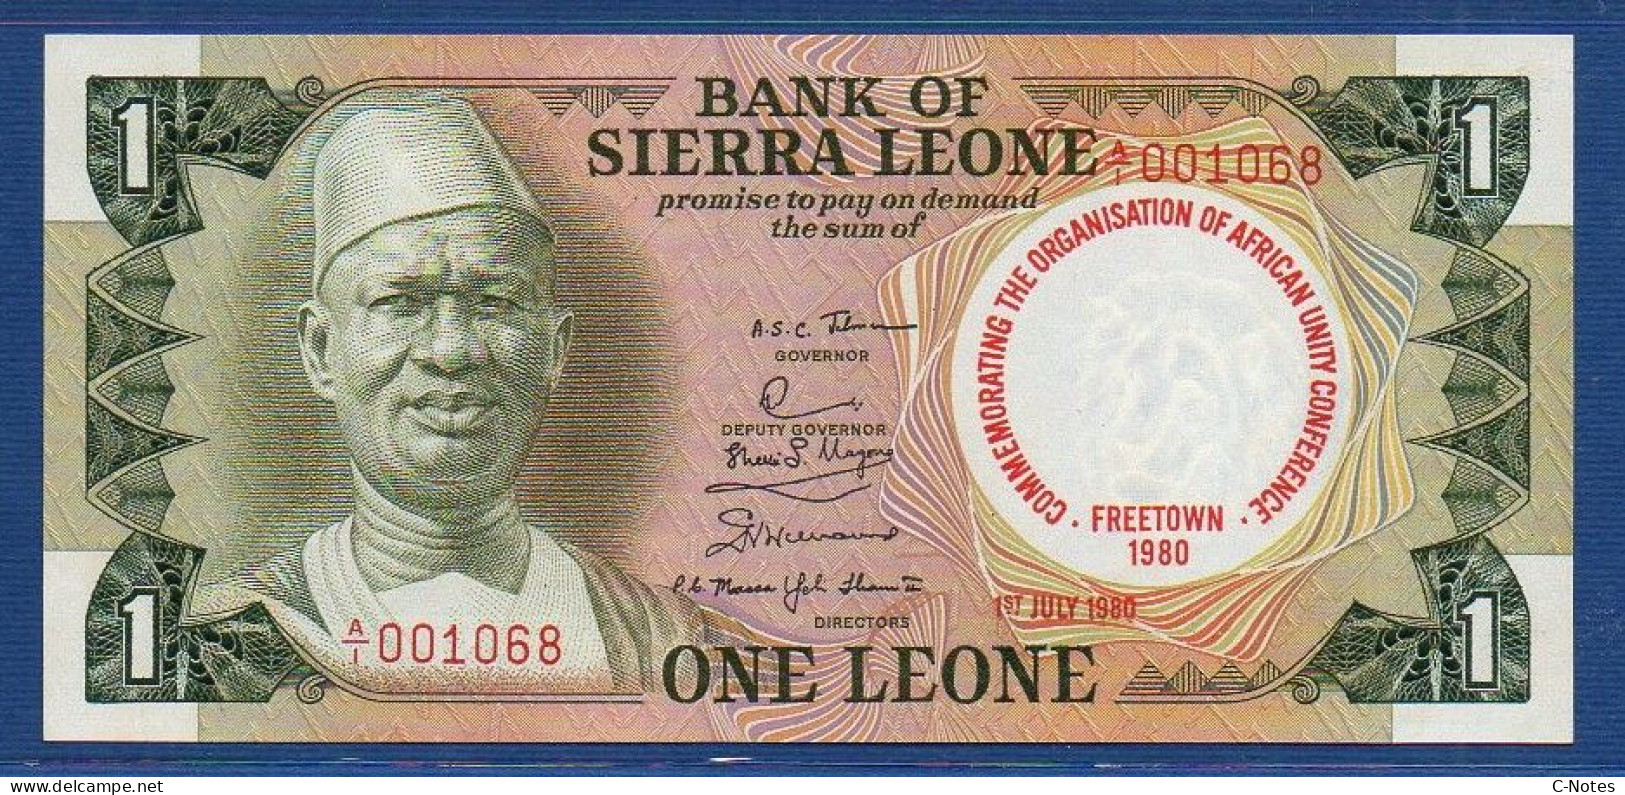 SIERRA LEONE - P.10 – 1 Leone 1980 UNC, S/n A/1 001068 "OAU Conference In Freetown" Commemorative Issue - Sierra Leone